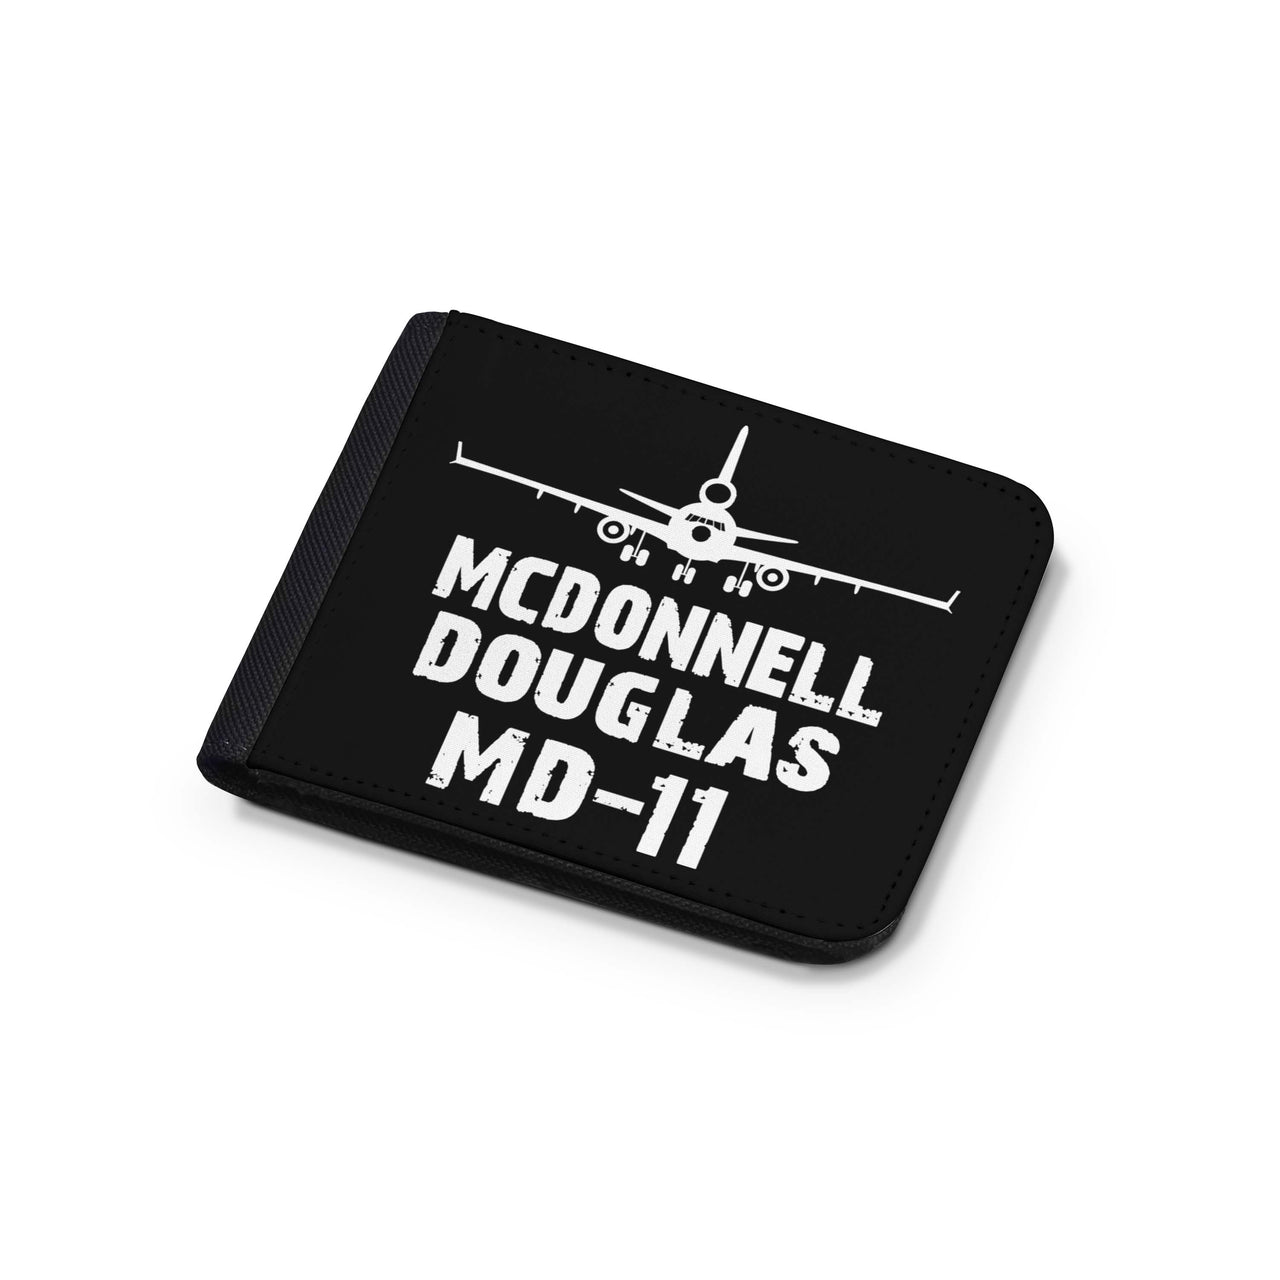 McDonnell Douglas MD-11 & Plane Designed Wallets